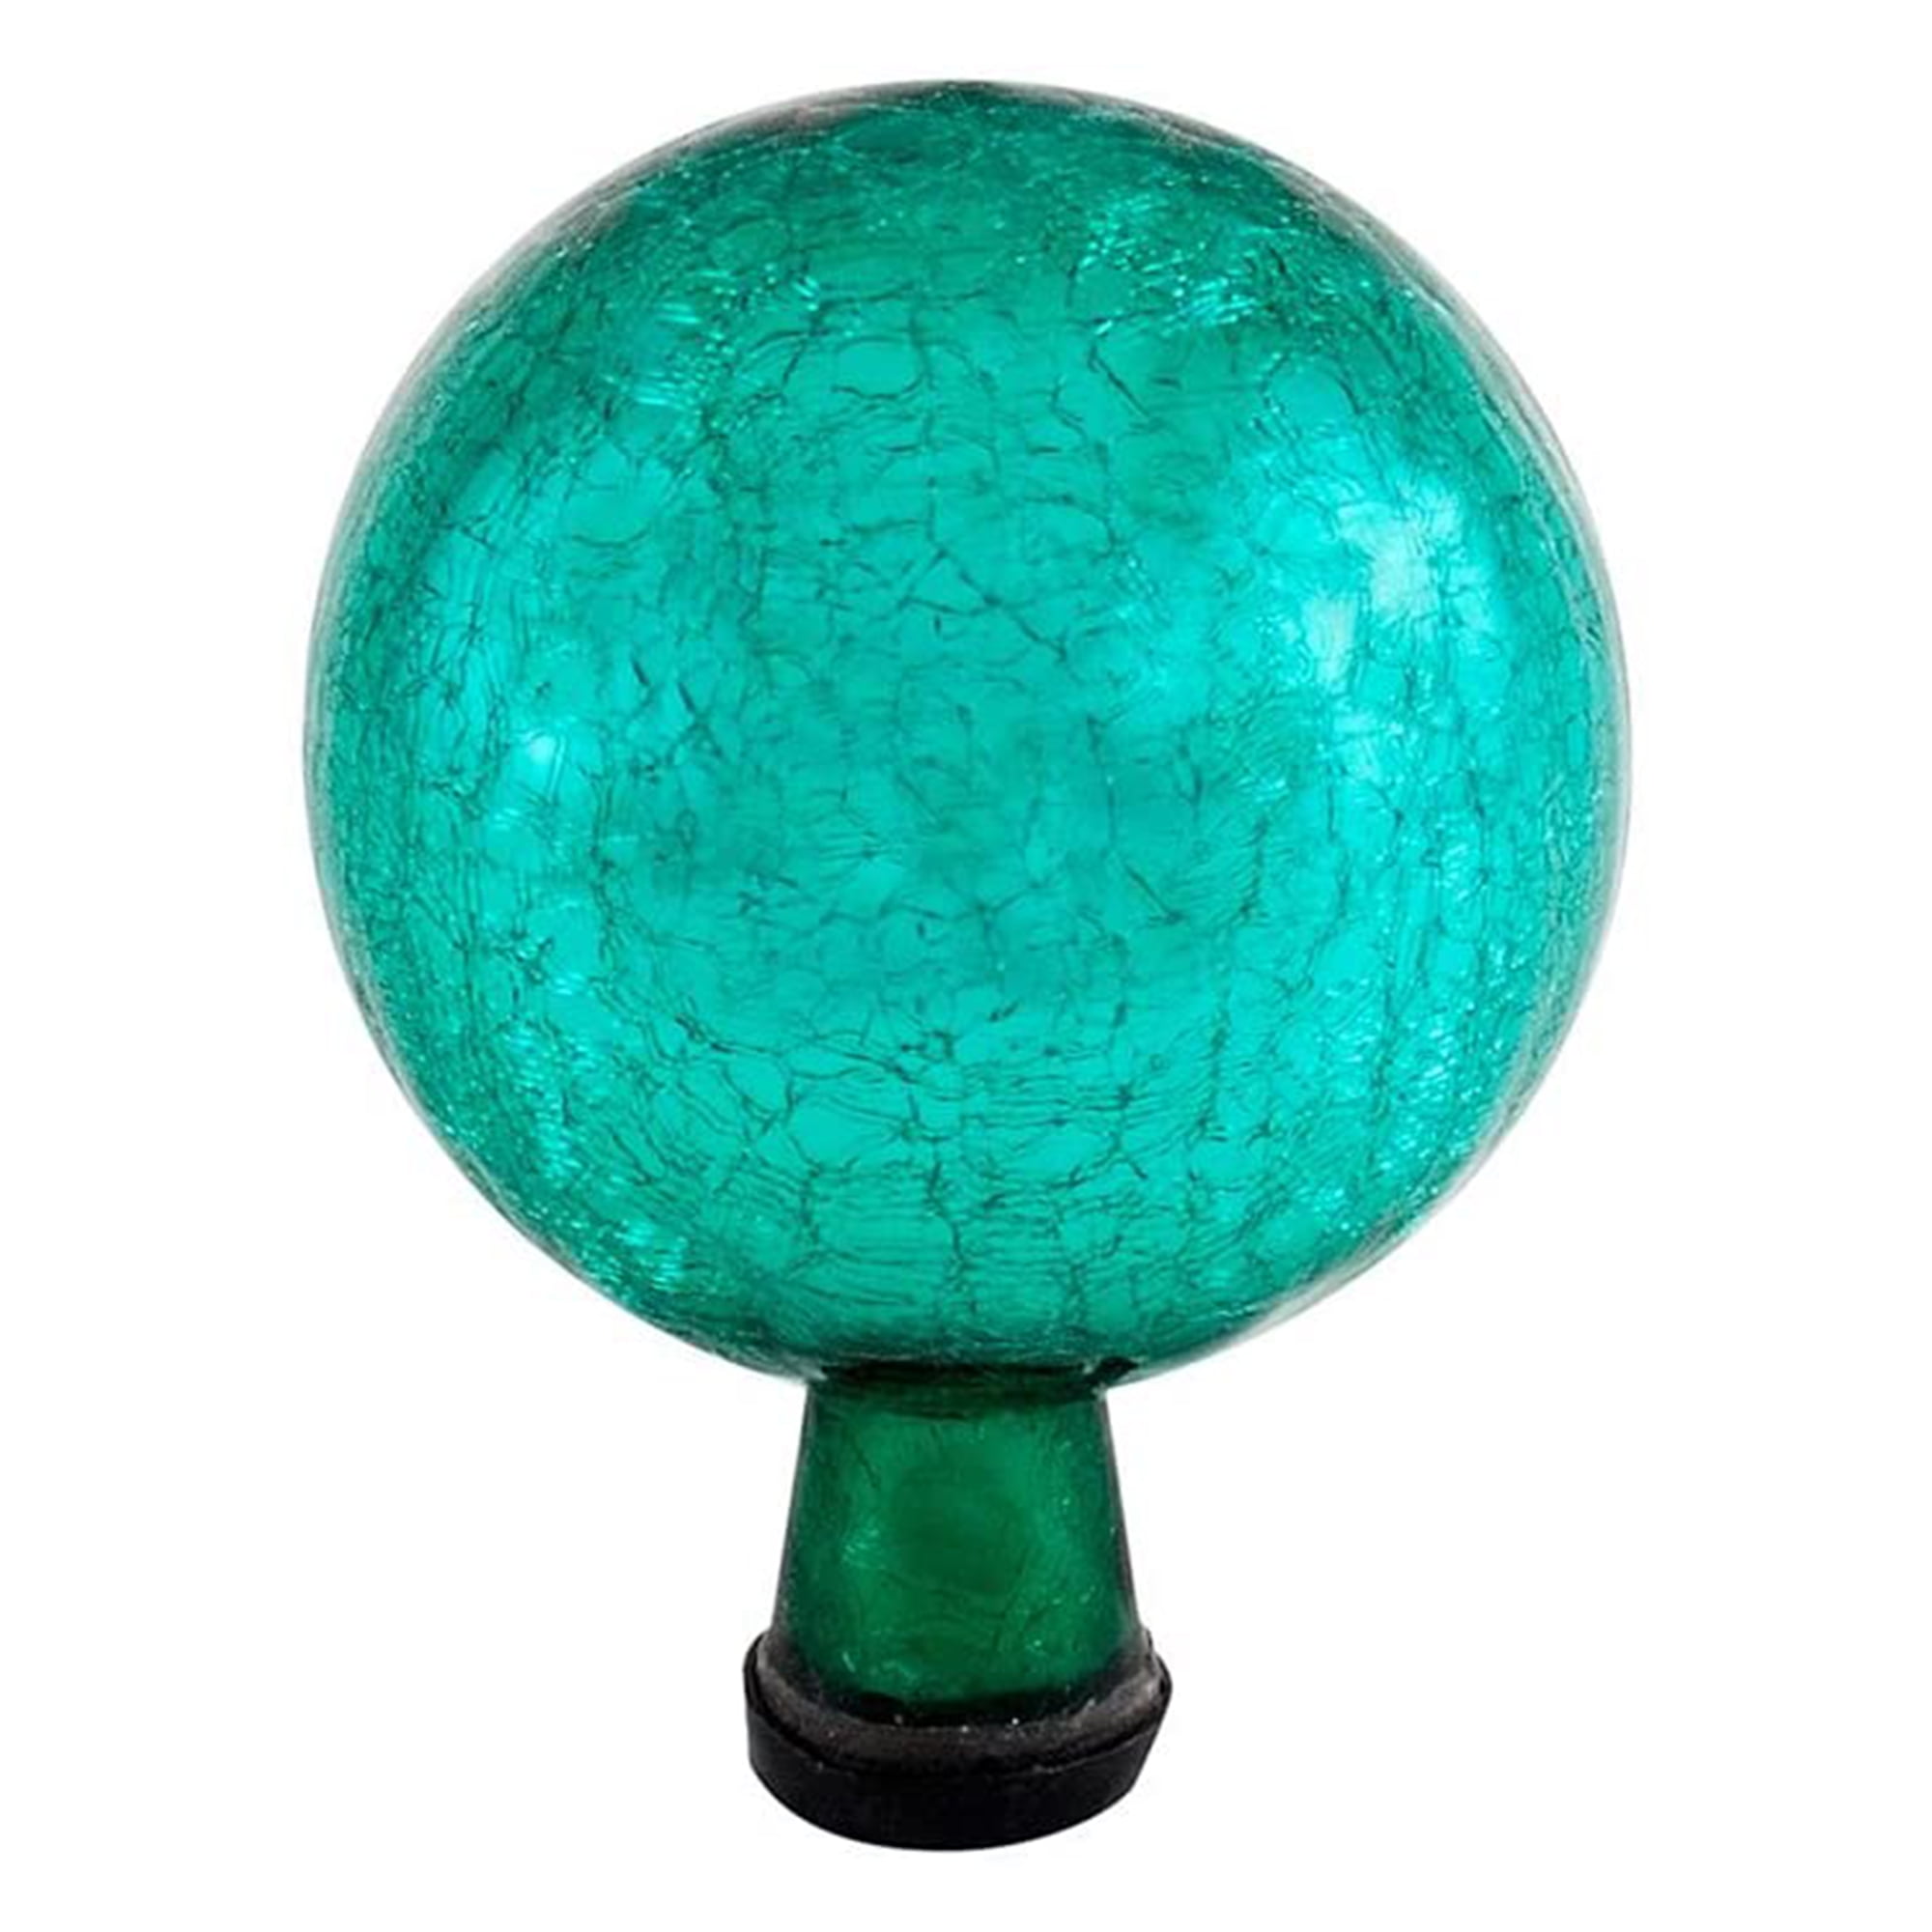 G6-eg-c 6 In. Gazing Globe - Emerald Green